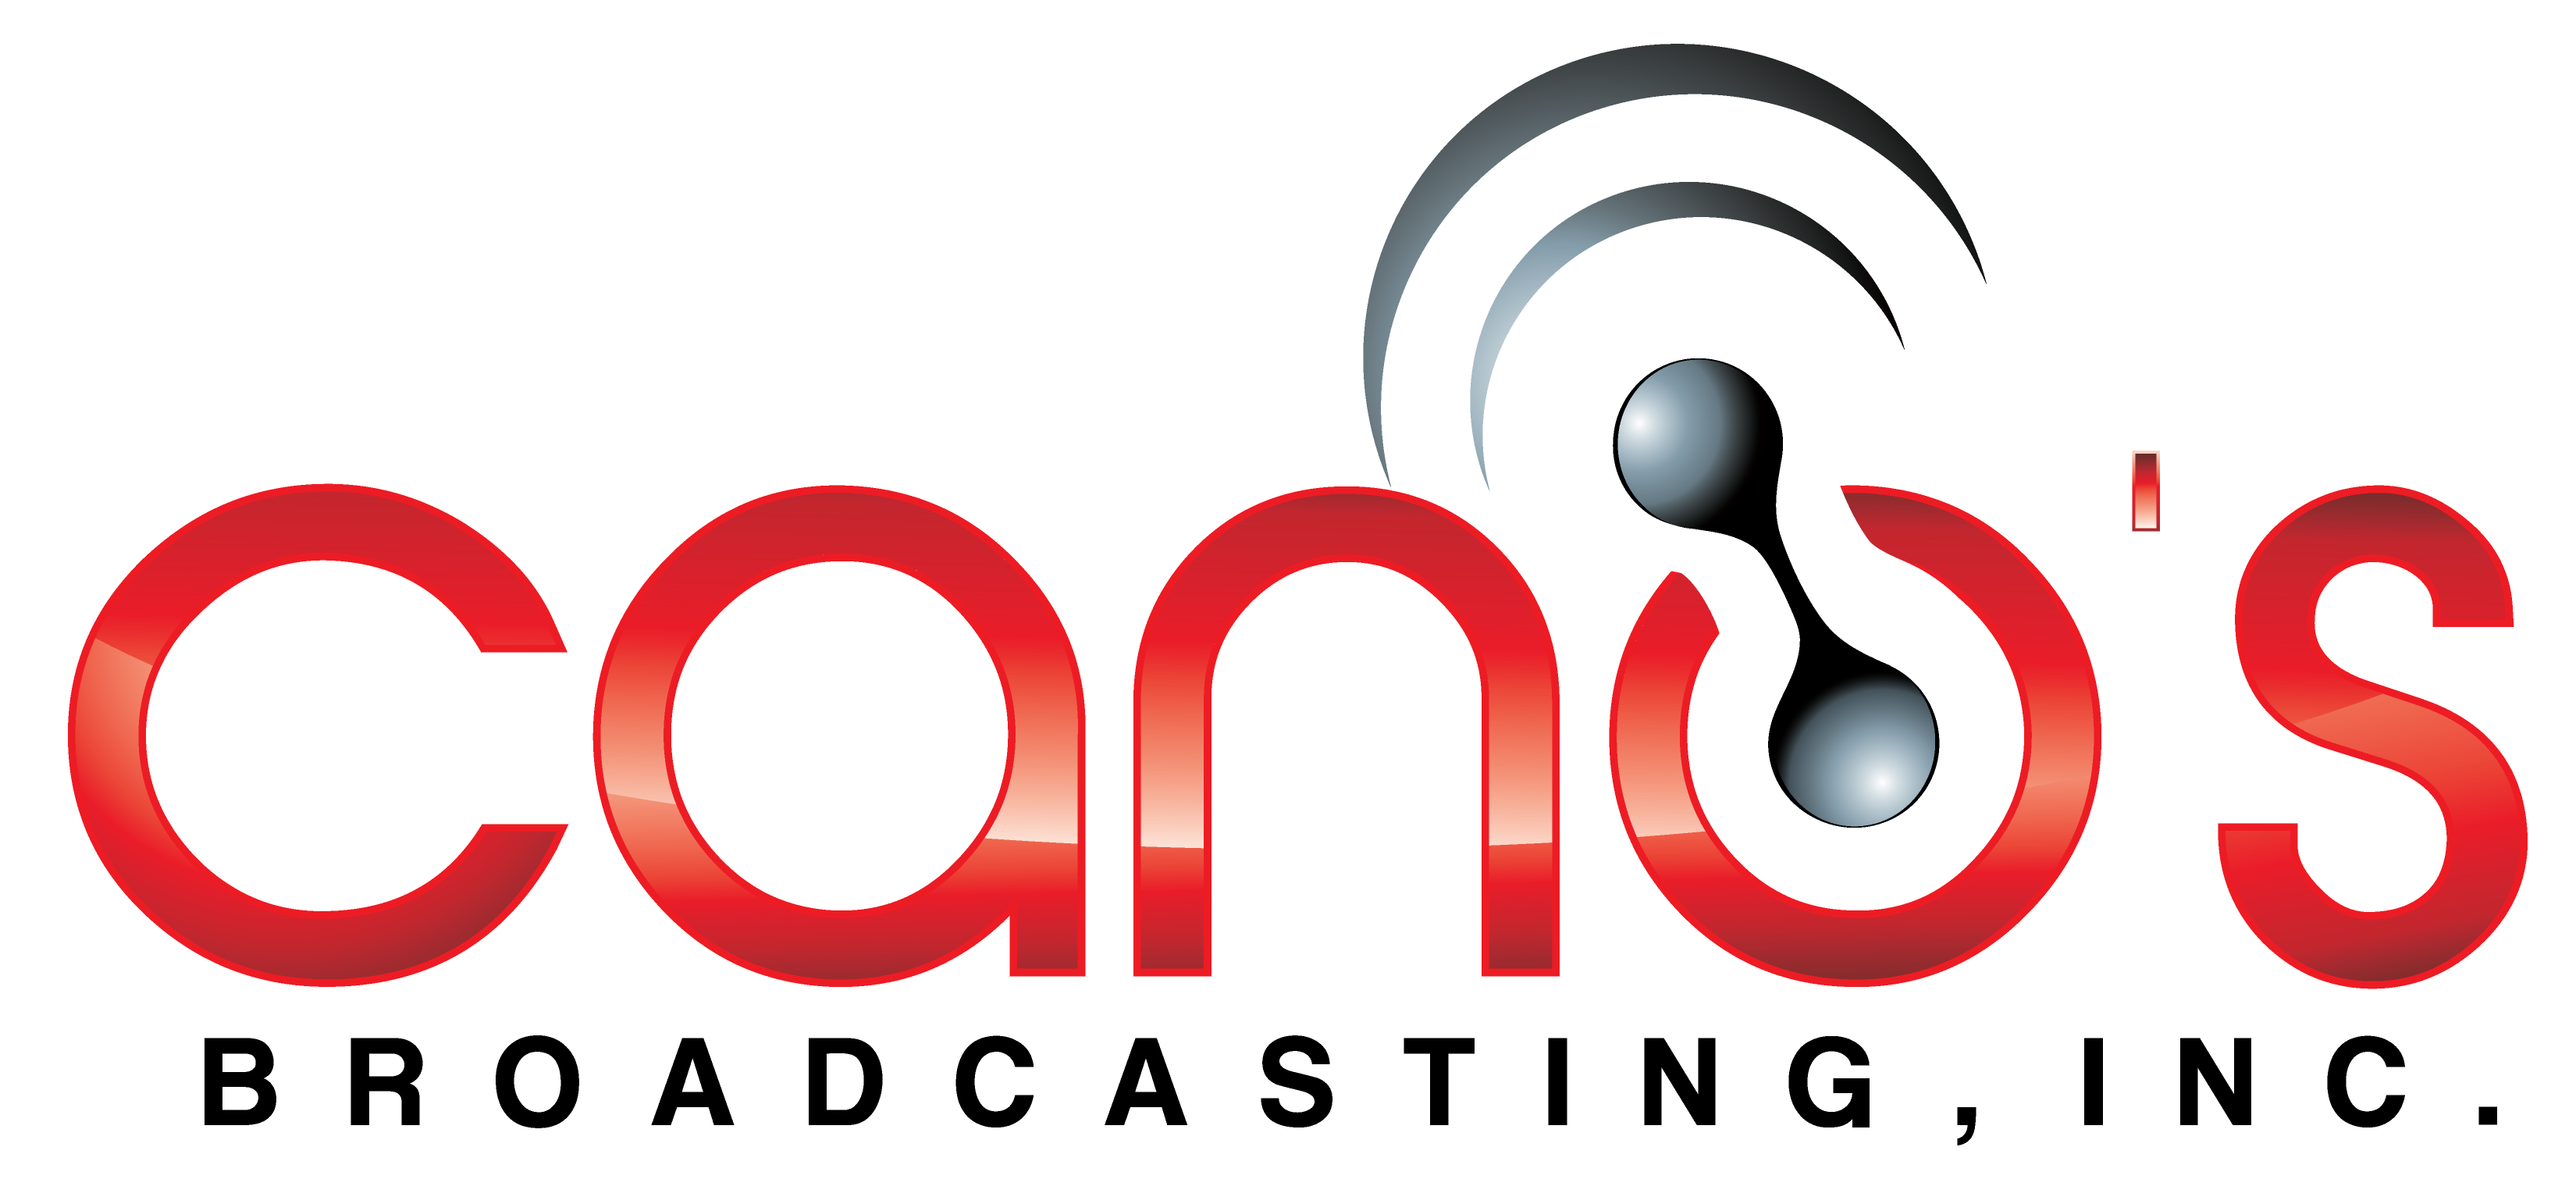 Cano's Broadcasting